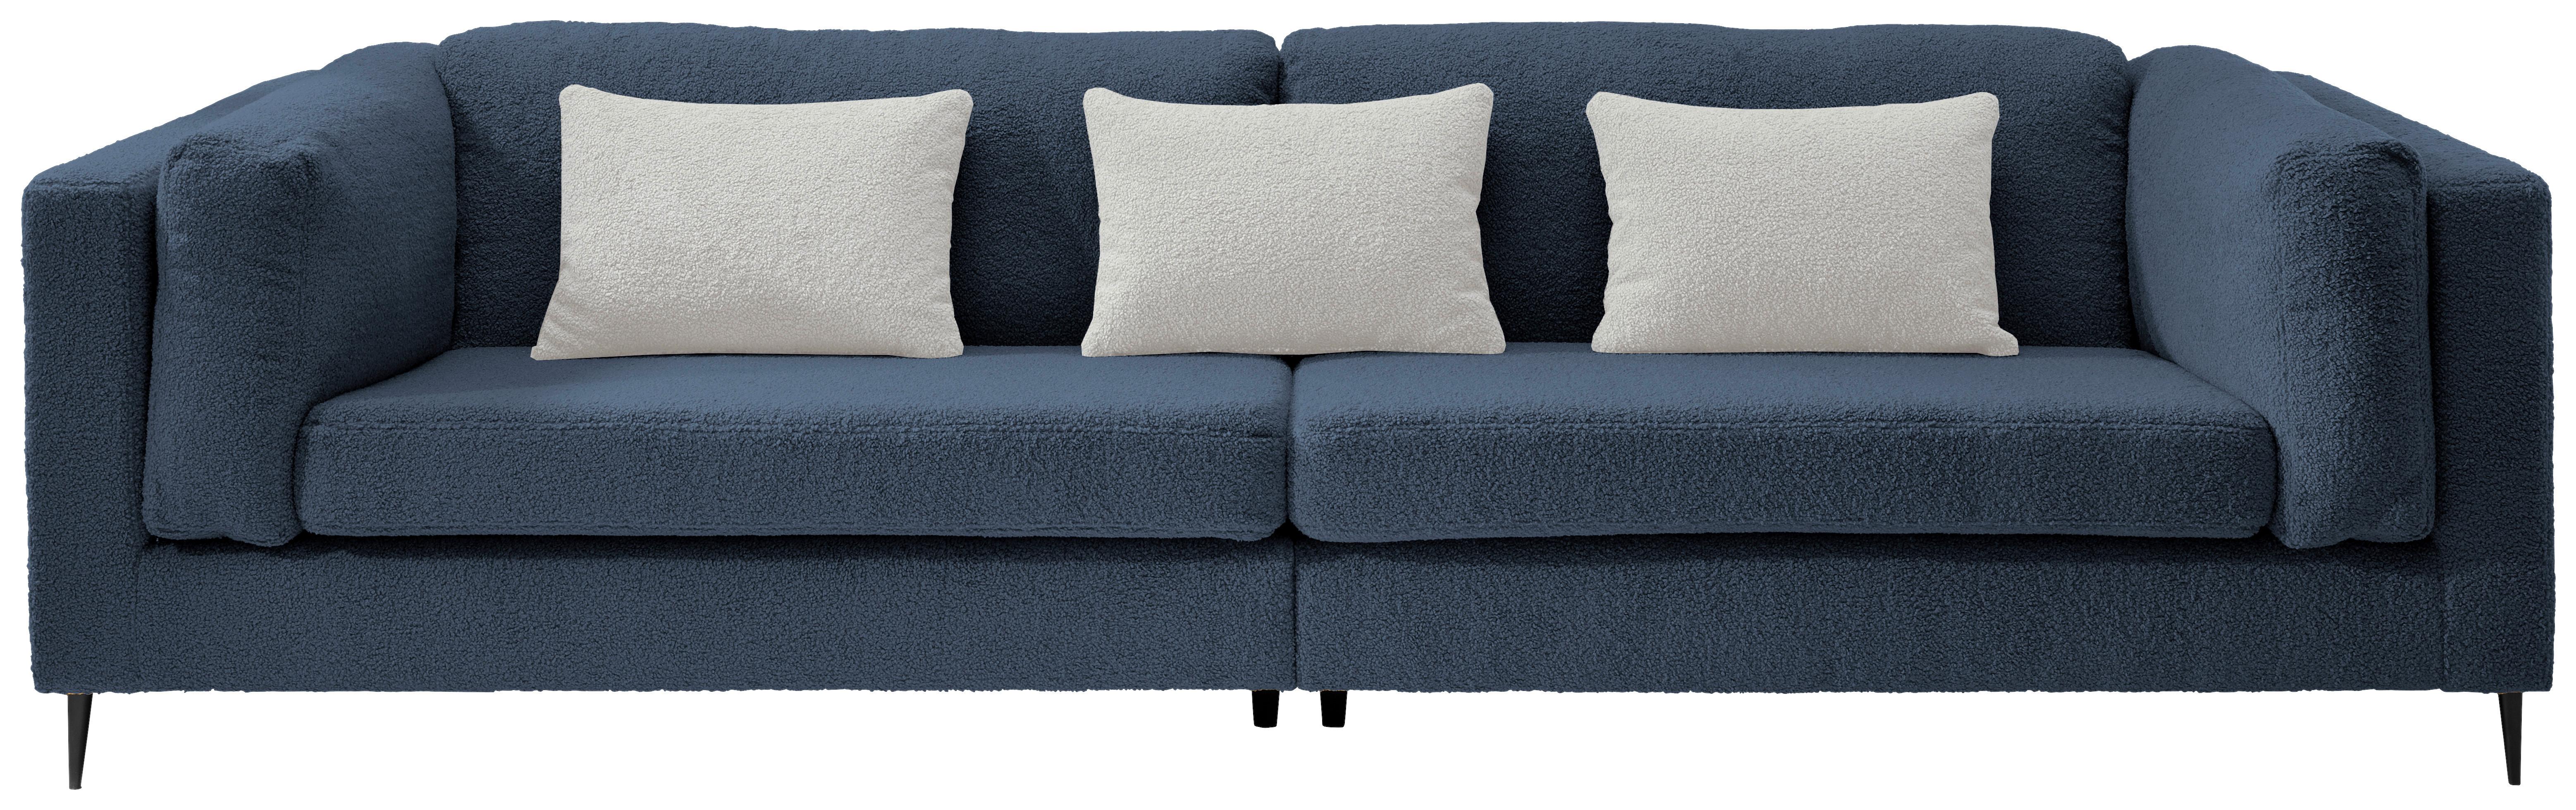 4-Sitzer-Sofa Roma Dunkelblau Teddystoff - Schwarz/Dunkelblau, Design, Textil (306/83/113cm) - Livetastic